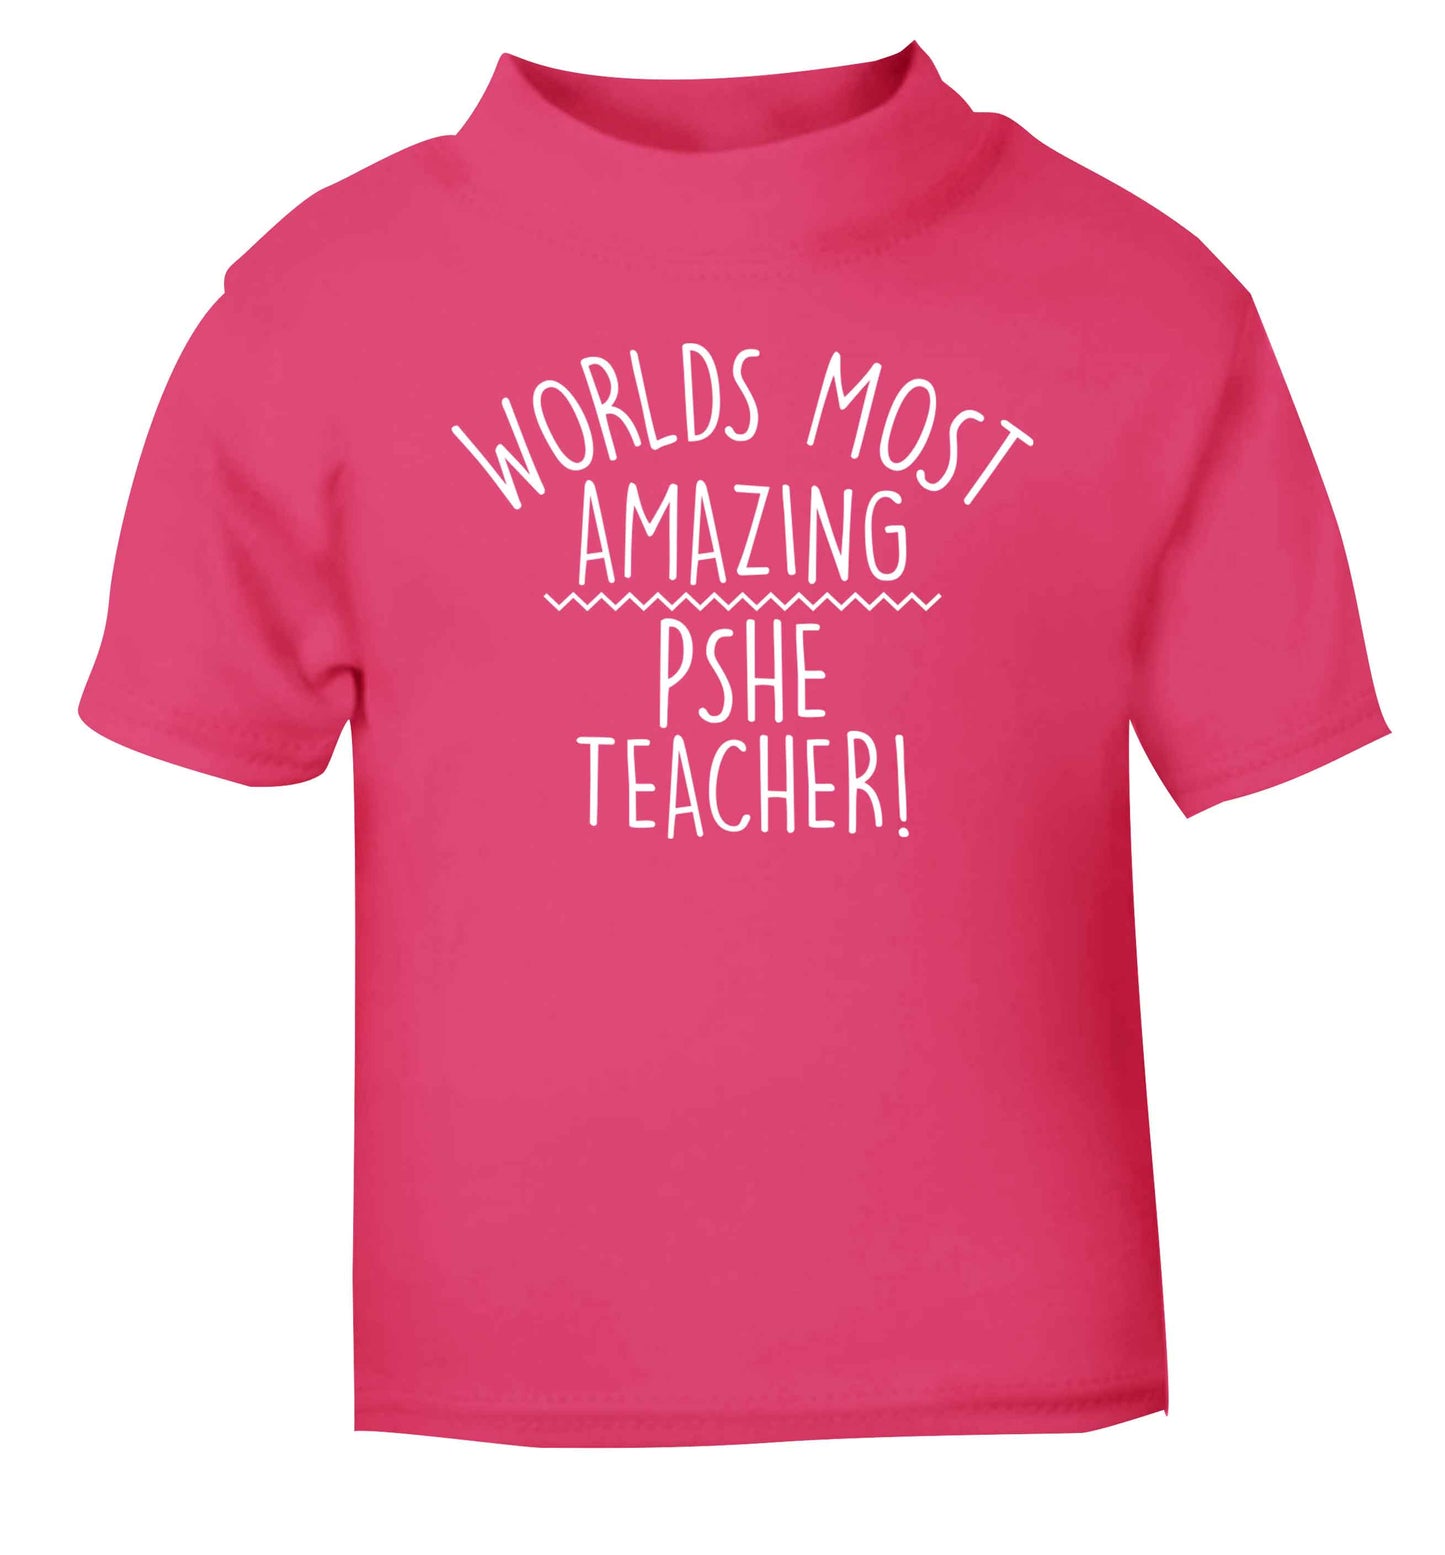 Worlds most amazing PHSE teacher pink baby toddler Tshirt 2 Years